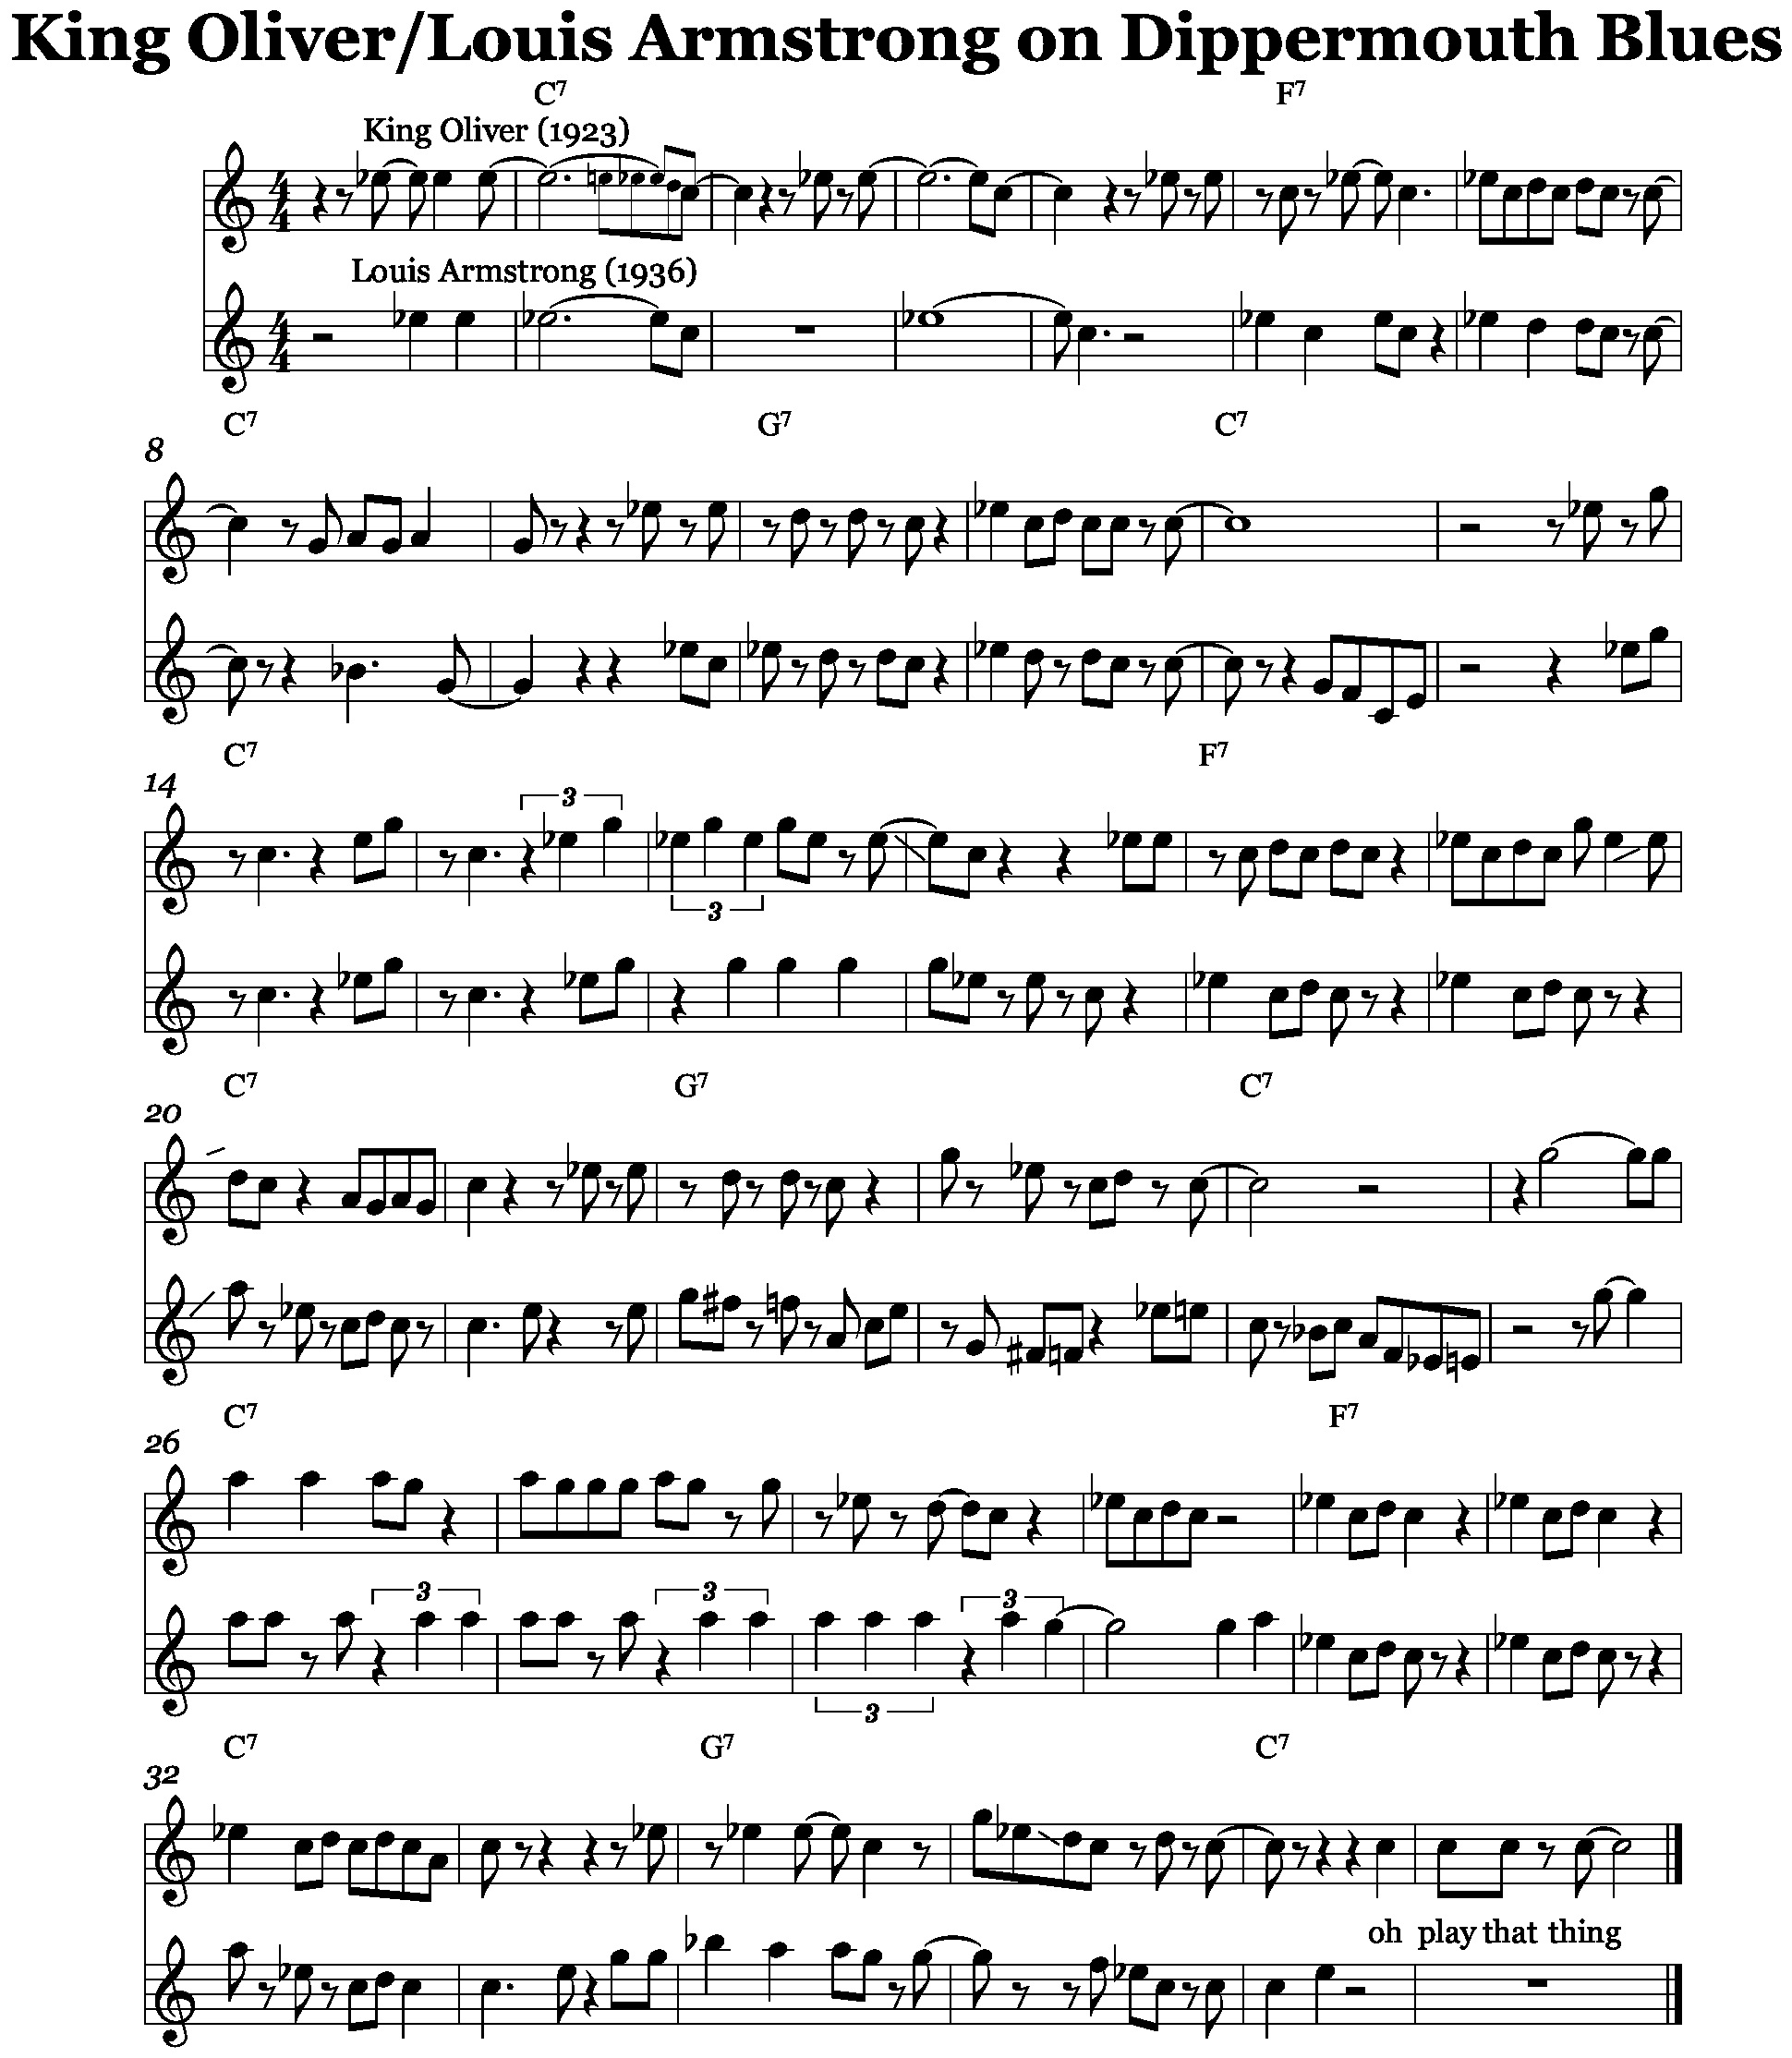 Dippermouth blues sheet music pdf